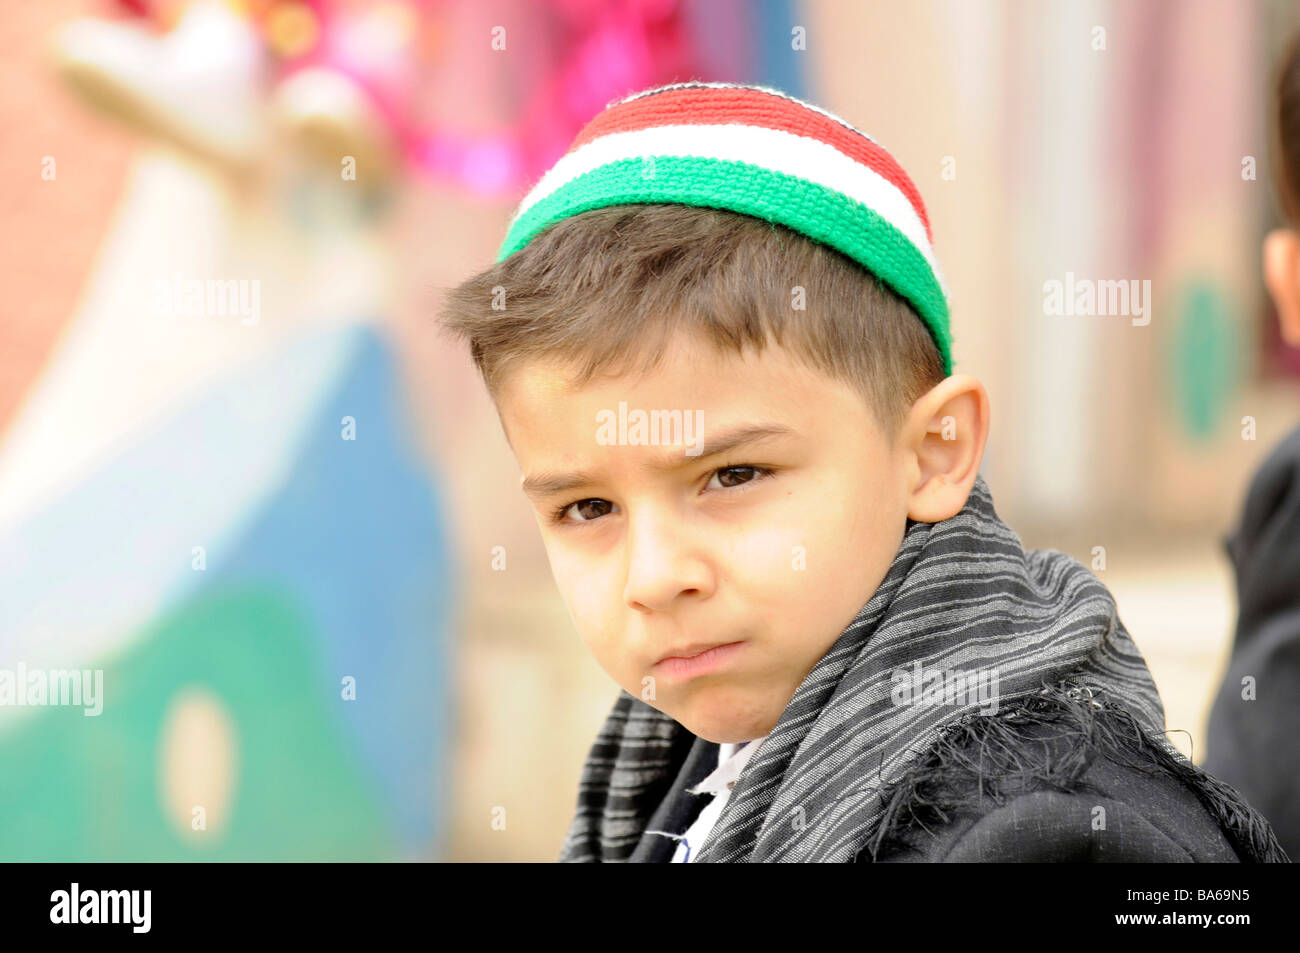 Portrait of a Kurdish child with a hat including the colours of Kurdistan's national flag. Photo taken in Iraqi Kurdistan. Stock Photo